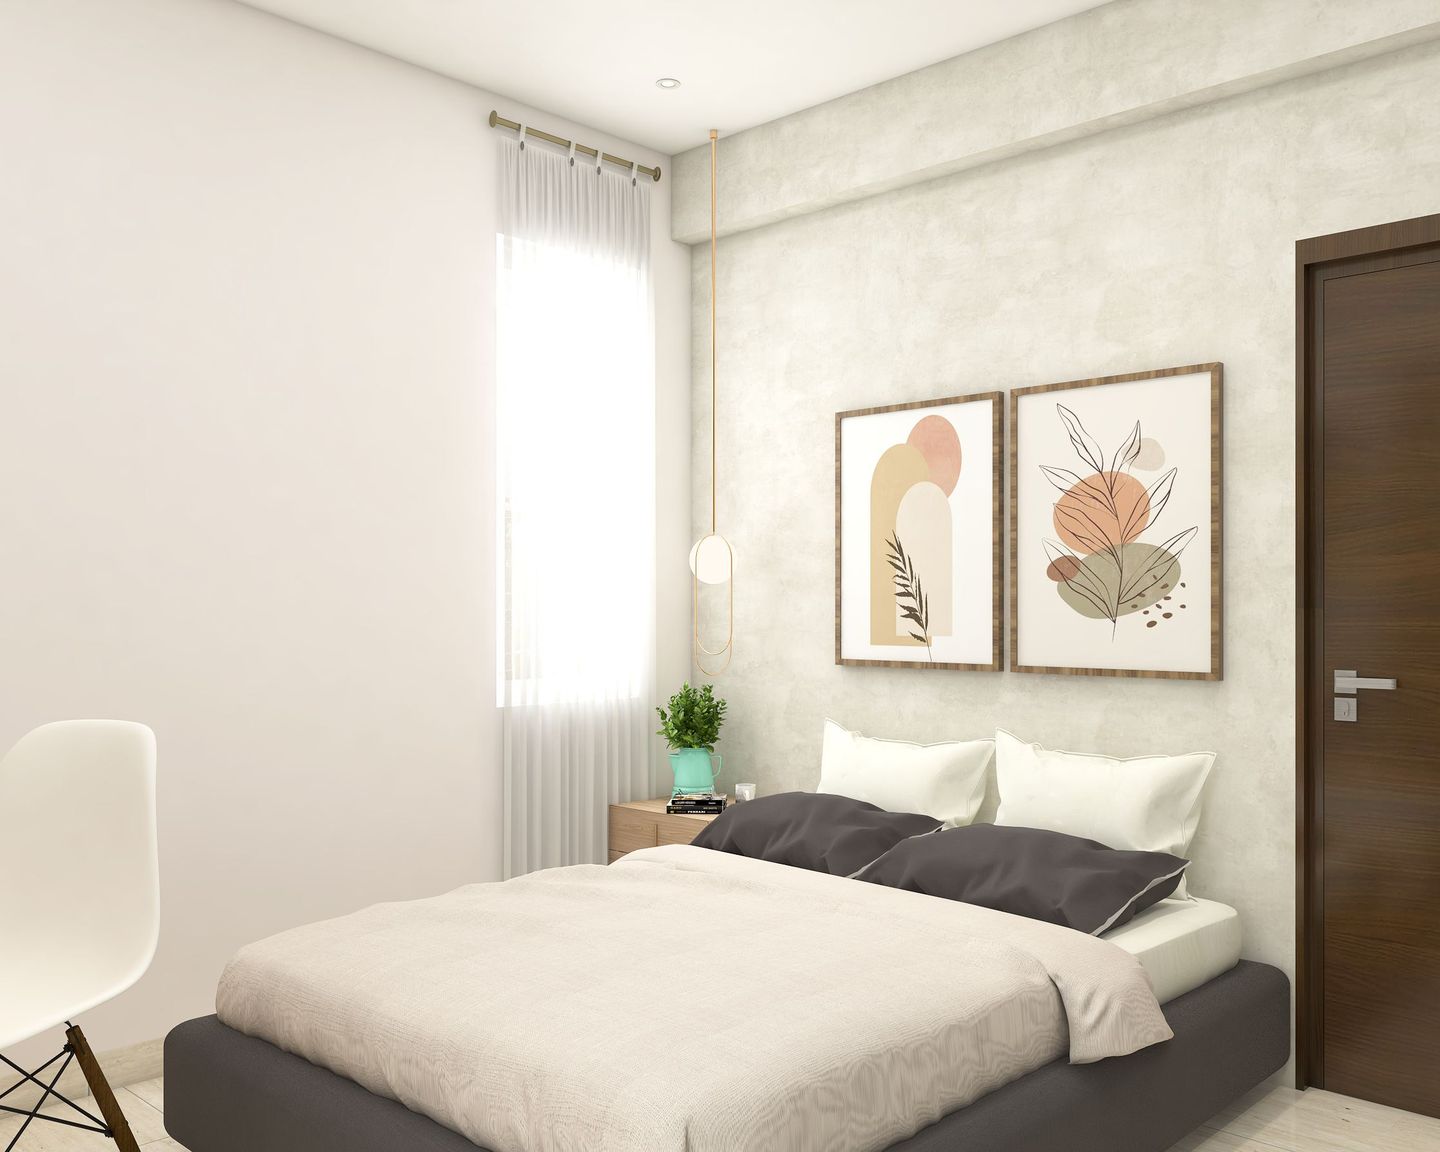 Compact Master Bedroom Design - Livspace